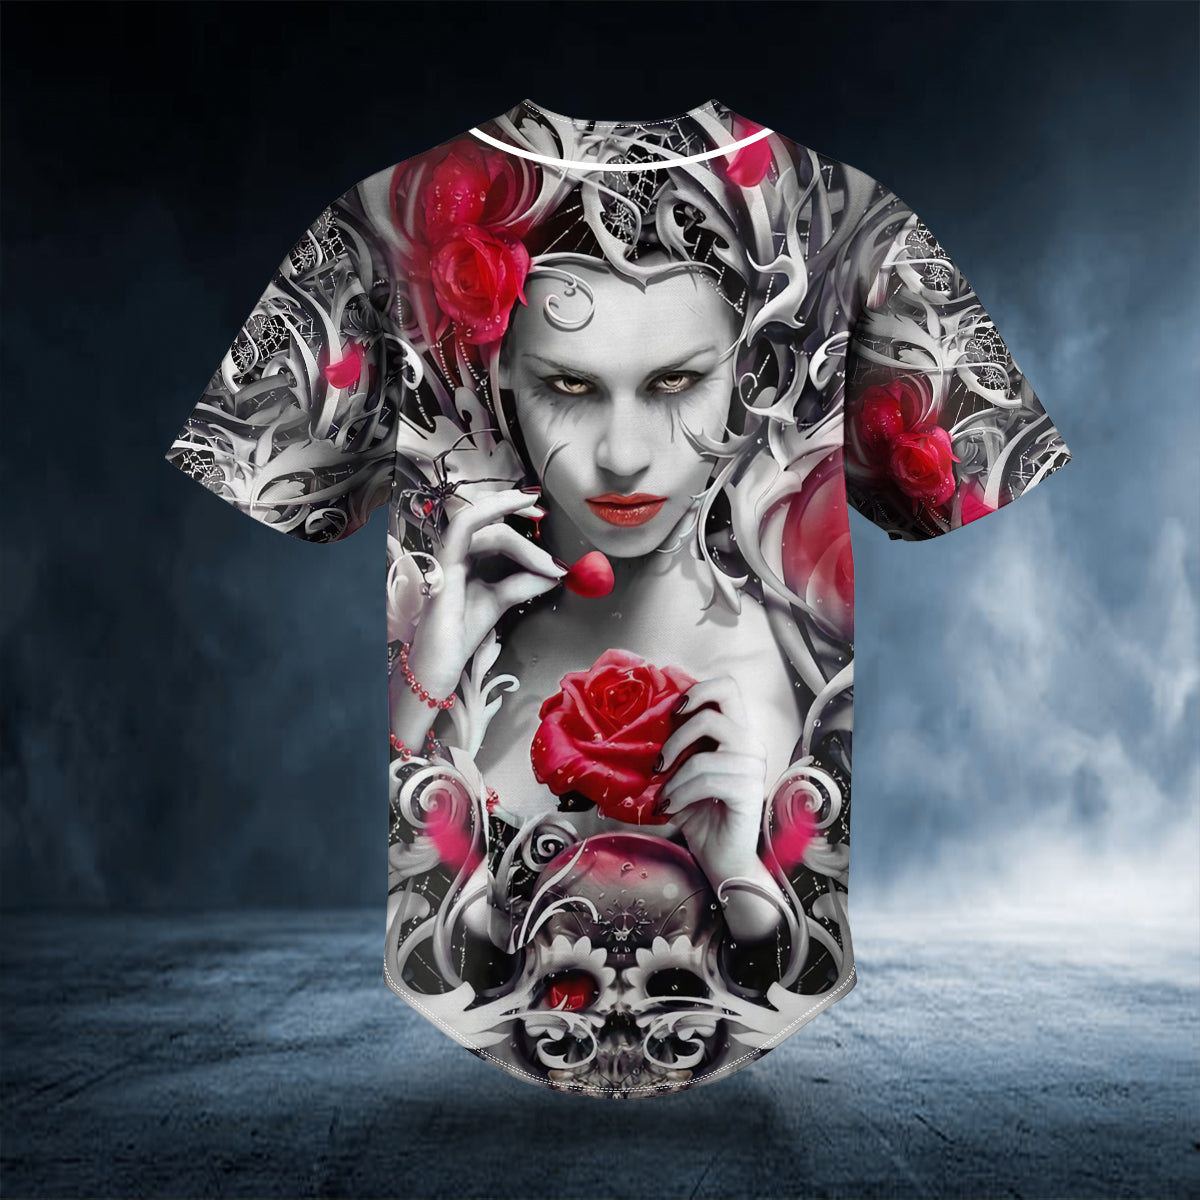 beautiful rose queen sugar skull custom baseball jersey bsj 575 wqmvk